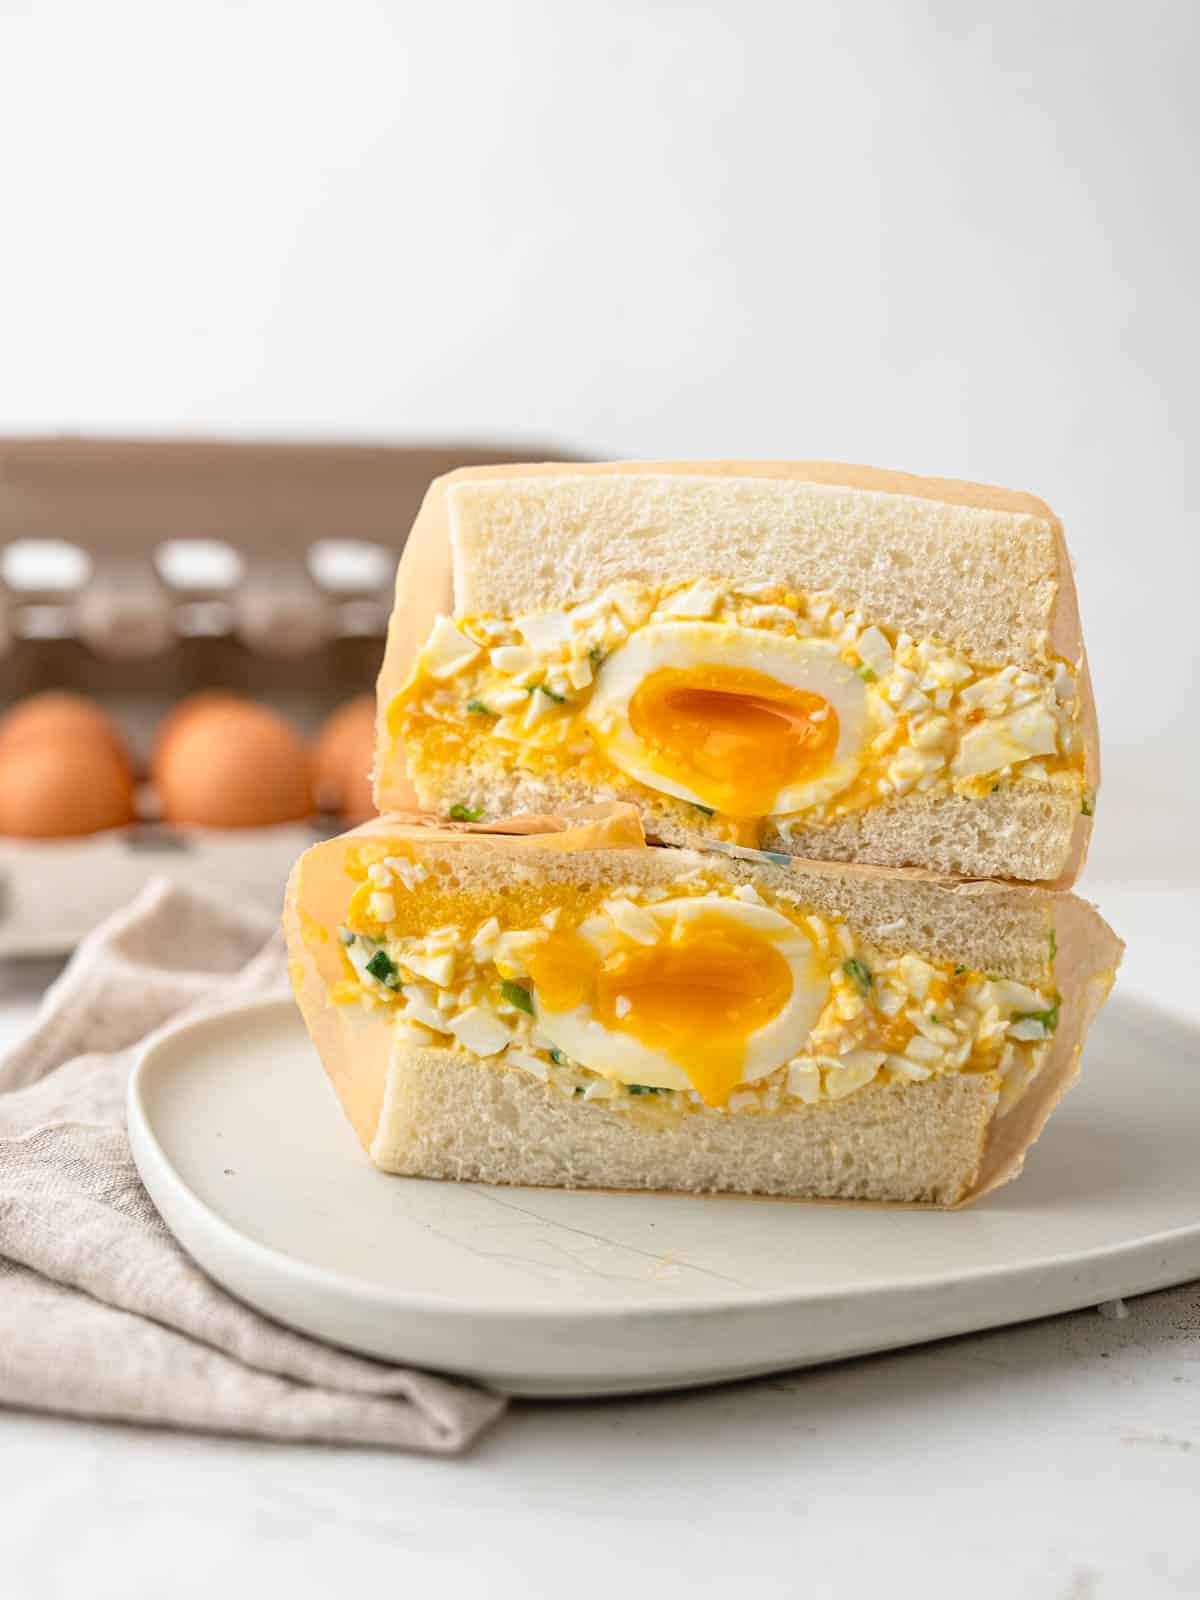 Tamago sando Japanese egg sandwich